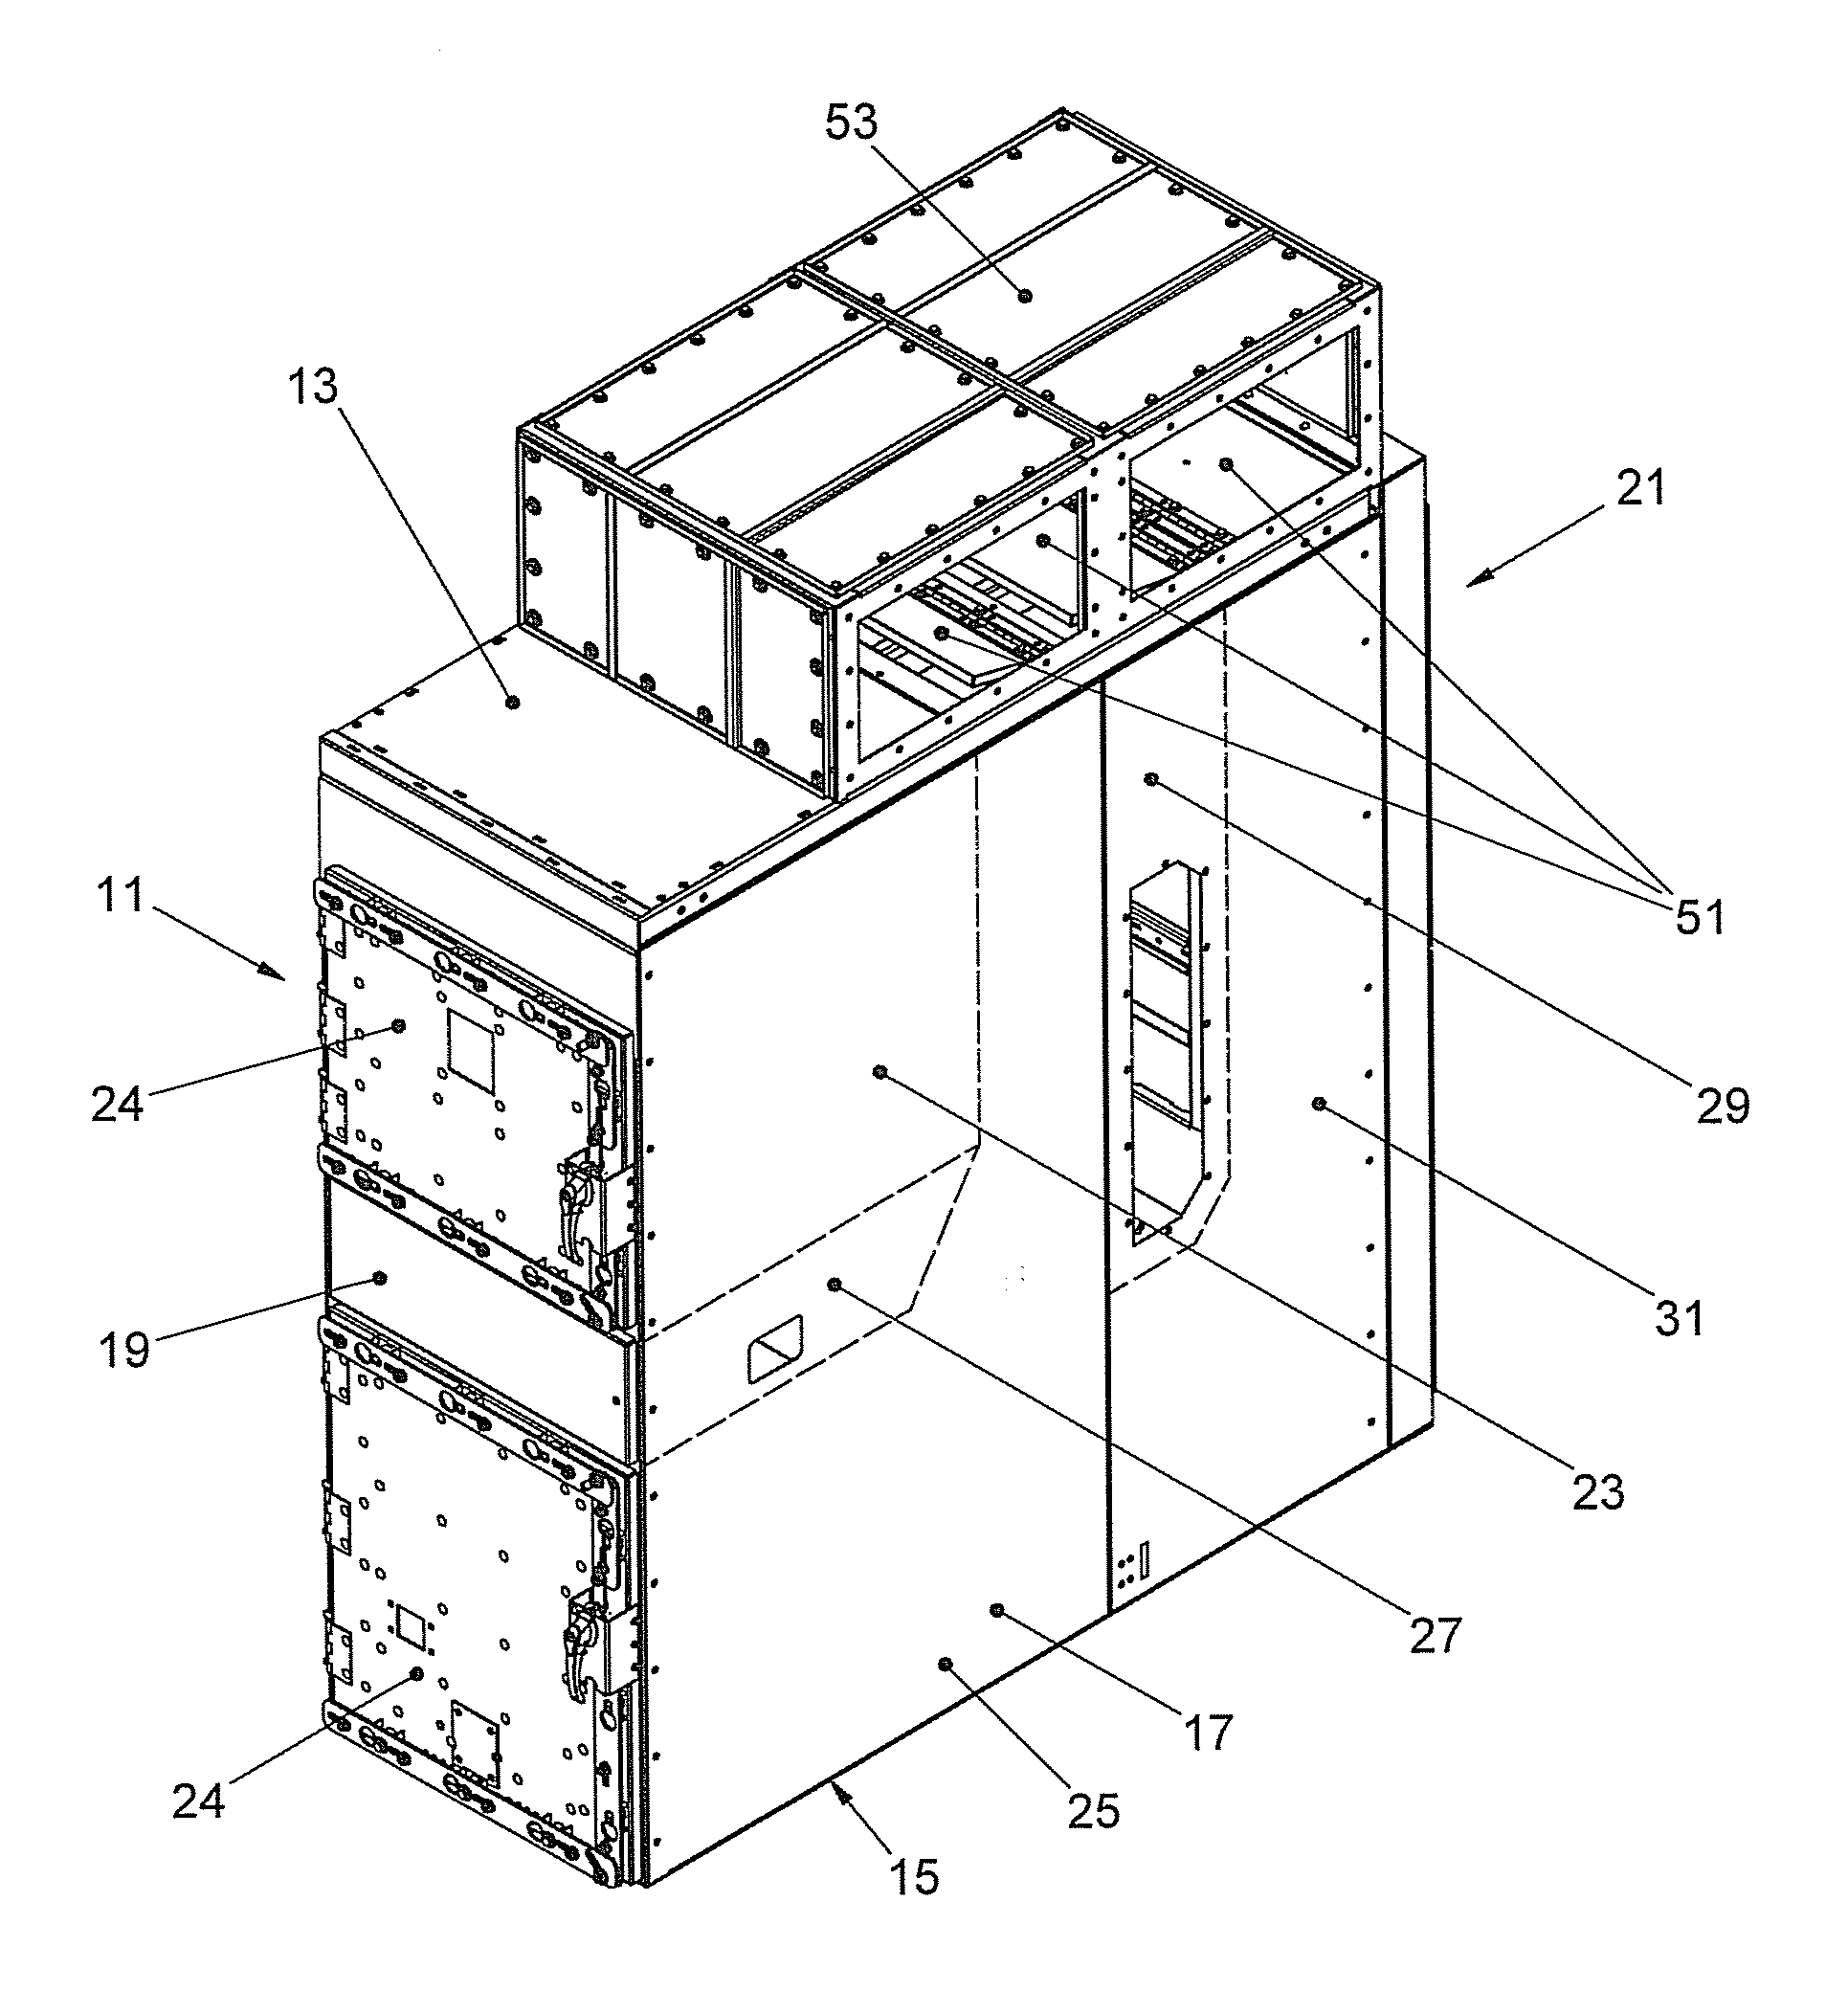 Arc-resistant switchgear enclosure with vent arrangement of a lower compartment